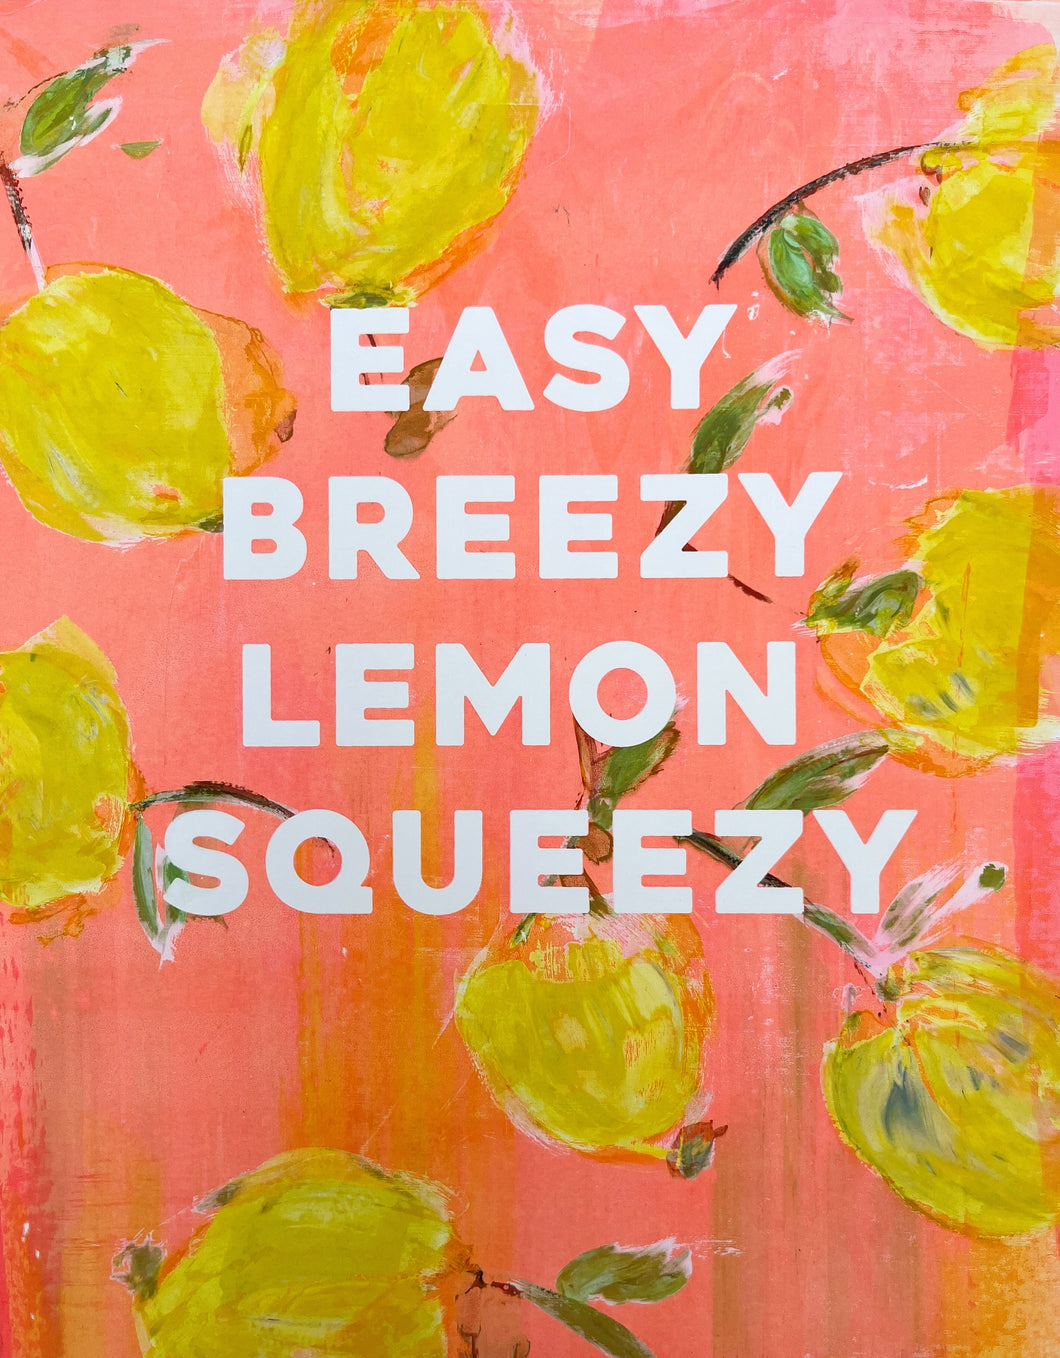 Easy Breezy Lemon Squeezy 12 - neon pink